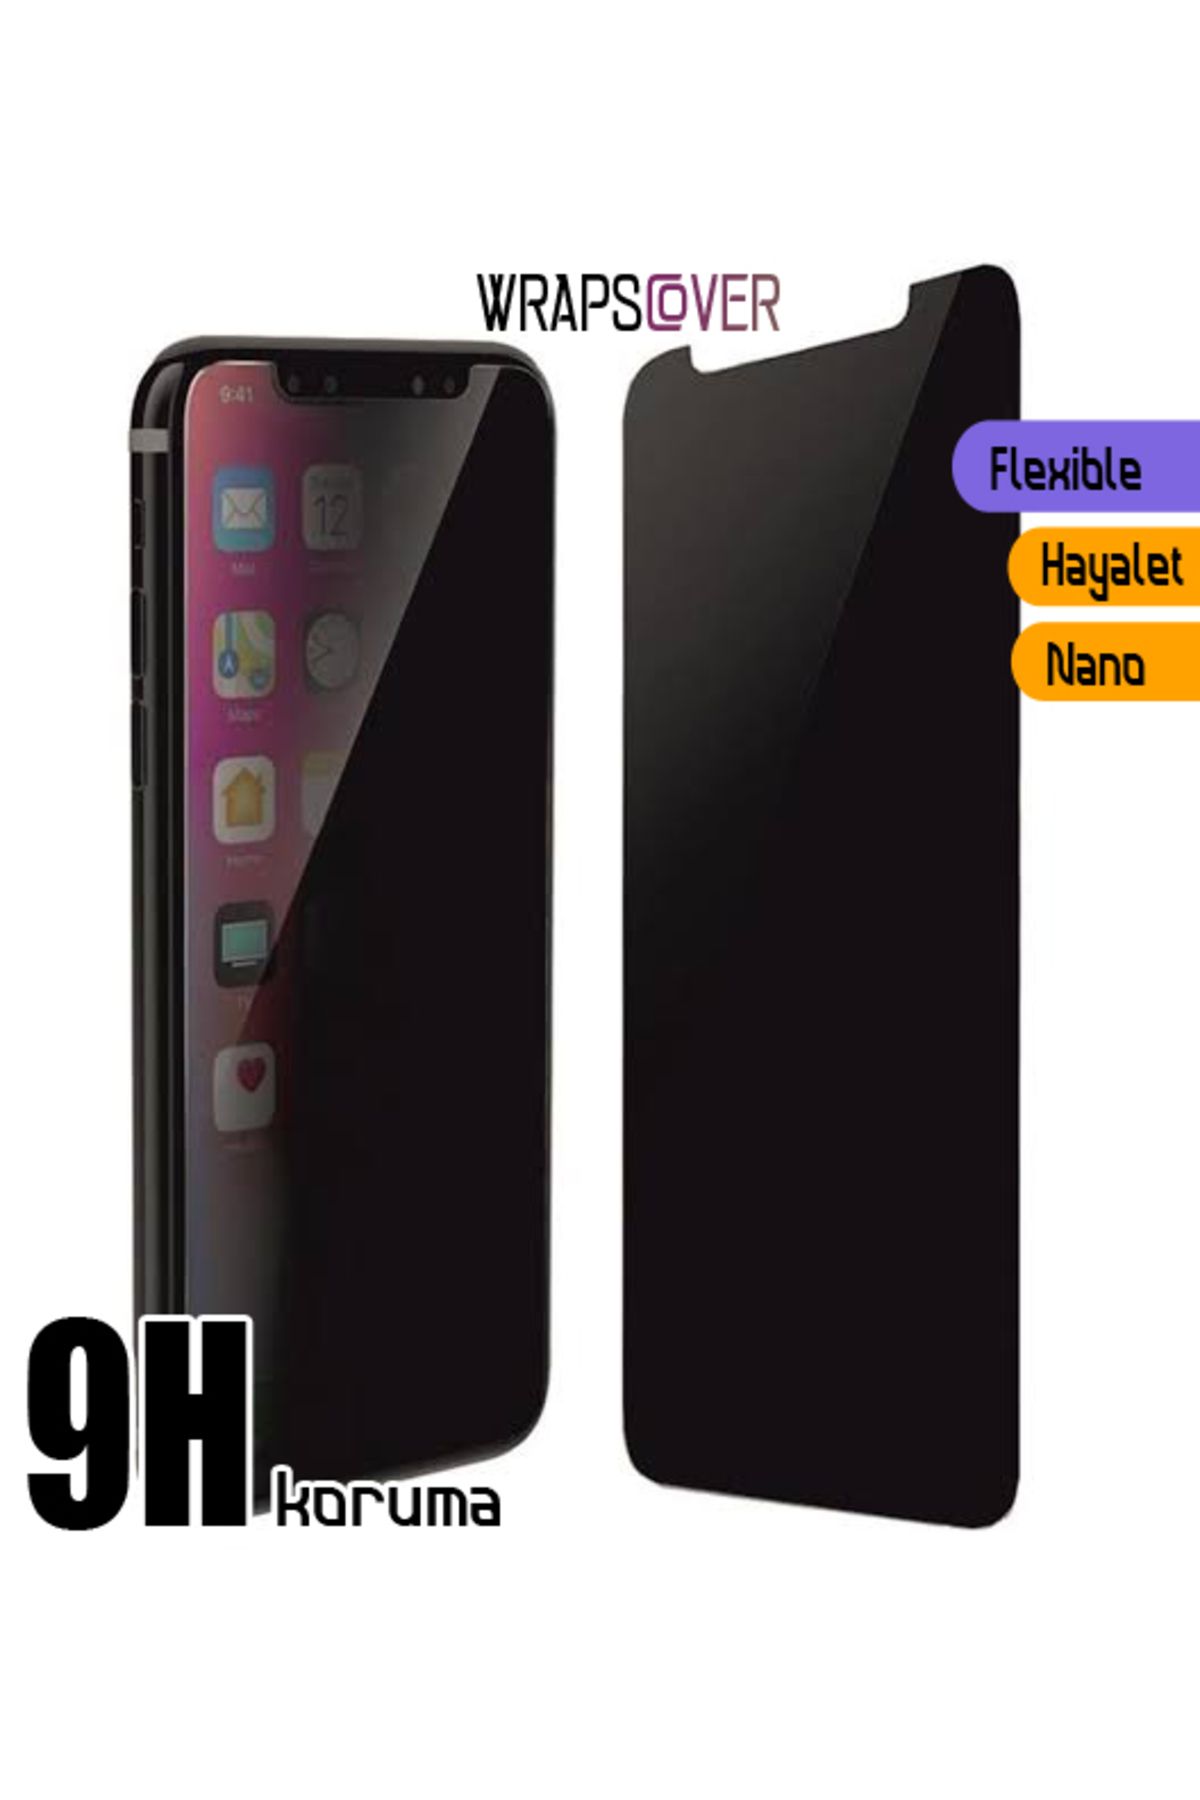 Wrapscover iPhone 5/5s Flexible Nano Hayalet Ekran Koruyucu Kaplama